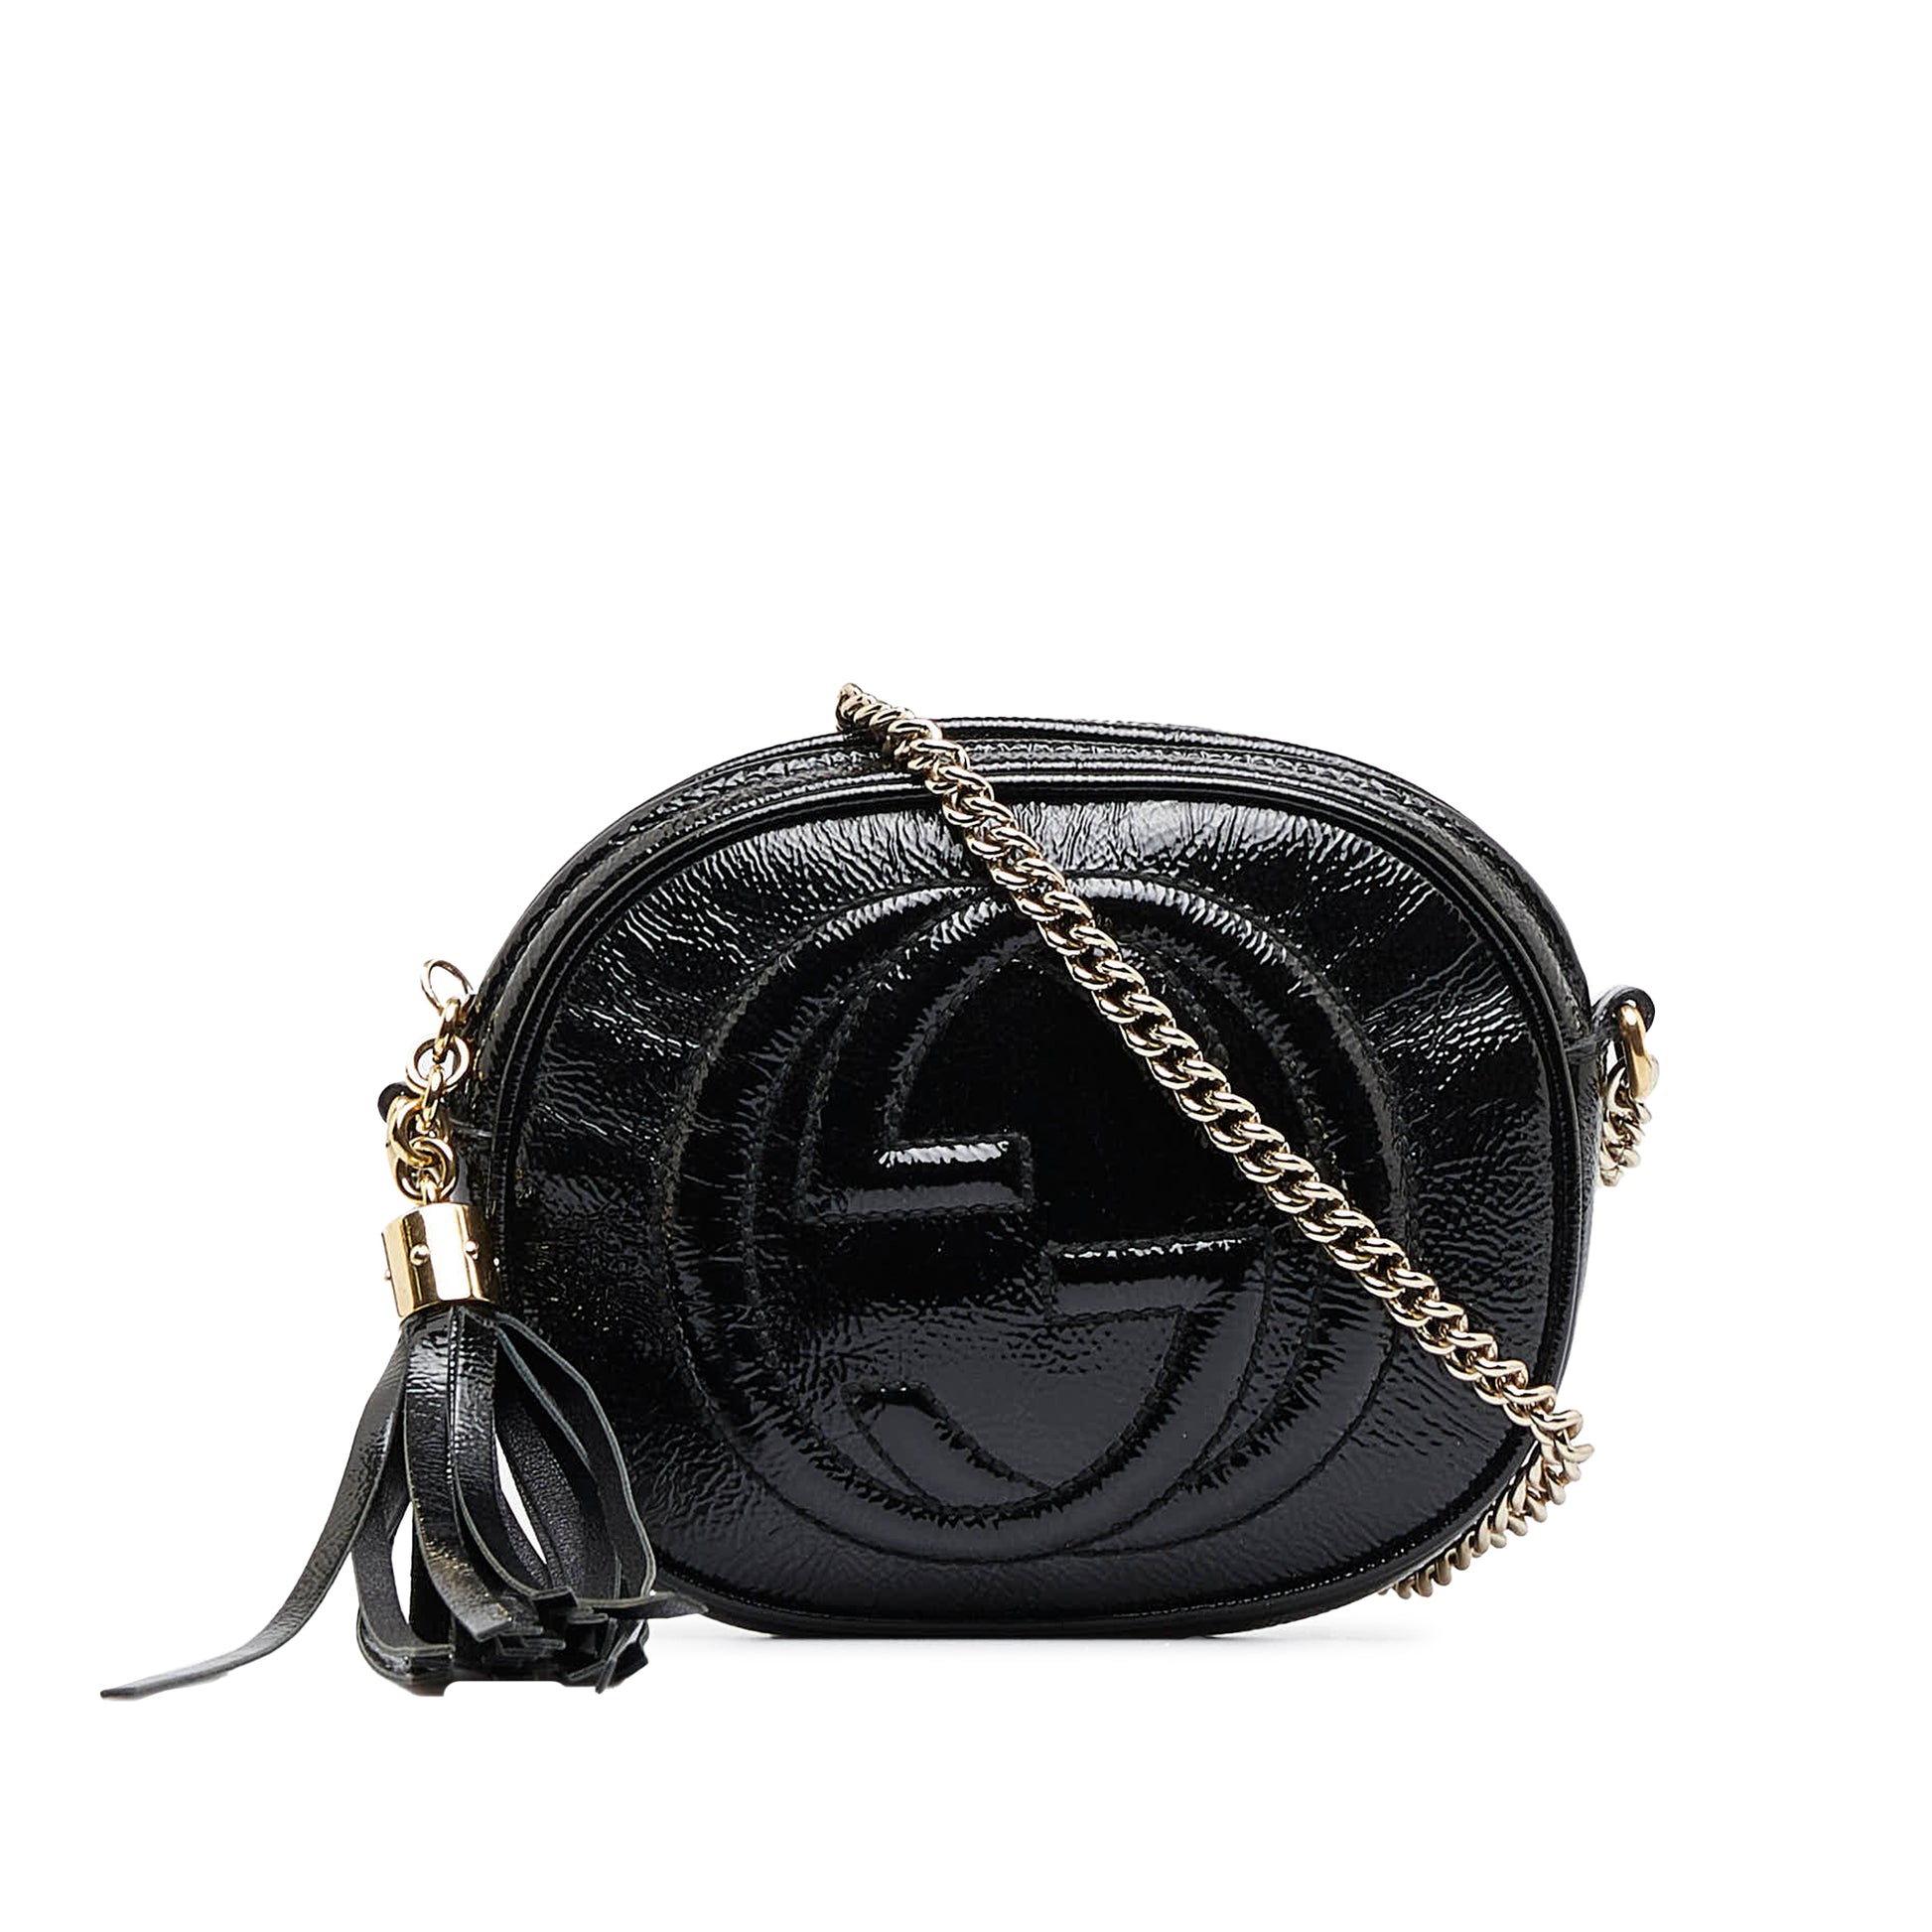 Gucci Soho Disco Black Patent Leather Crossbody Bag